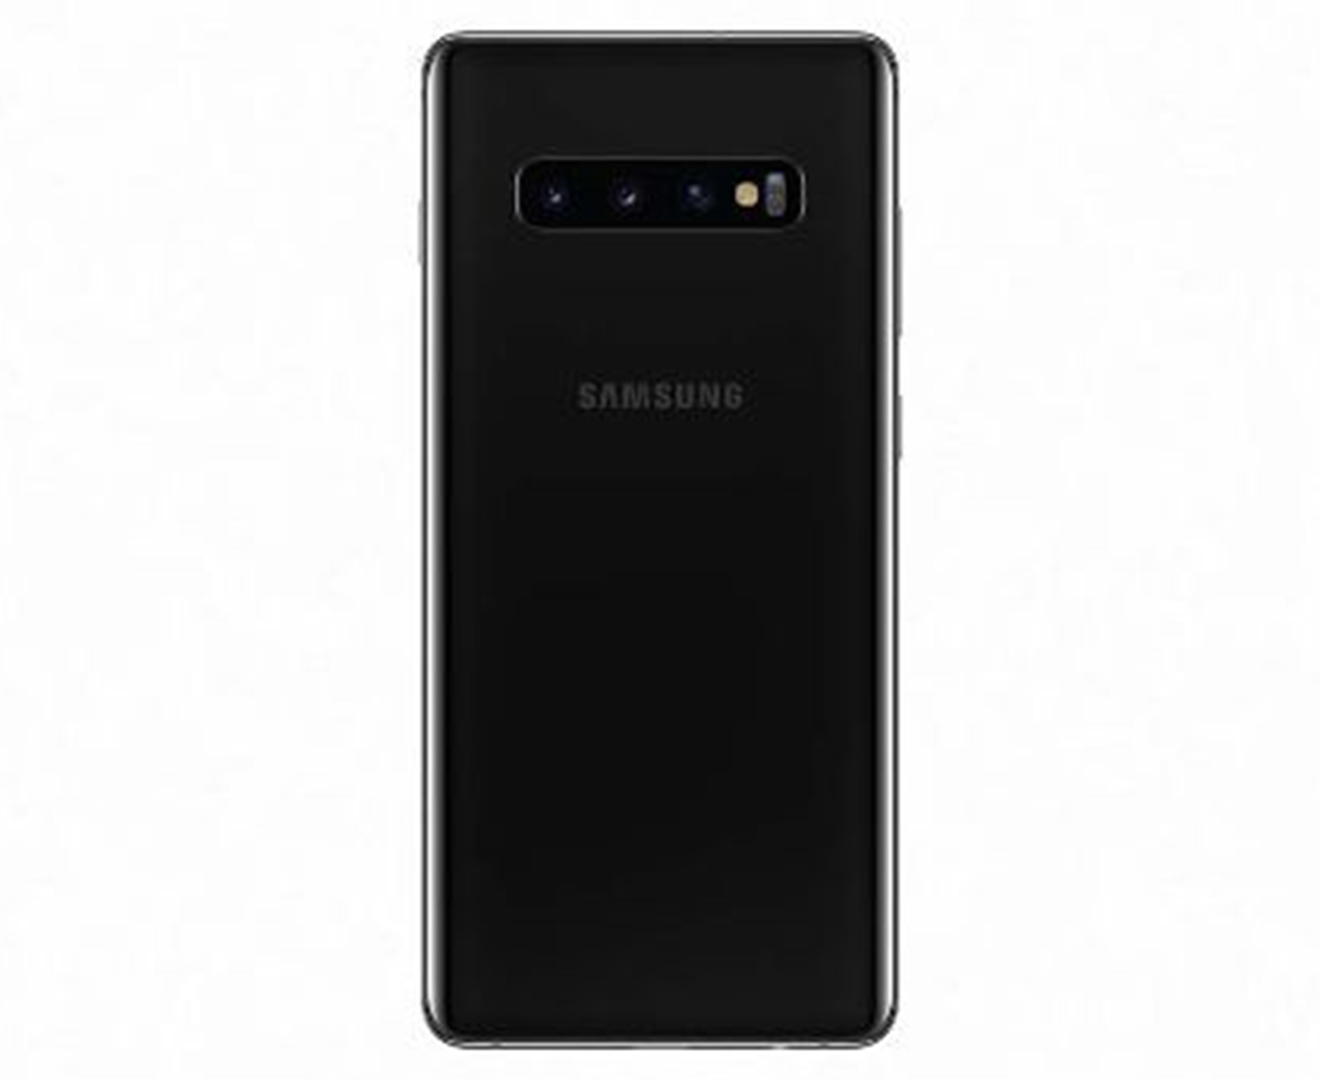 Samsung Galaxy S10e 128gb Smartphone Unlocked Prism Black 9400022087996 Ebay 4255